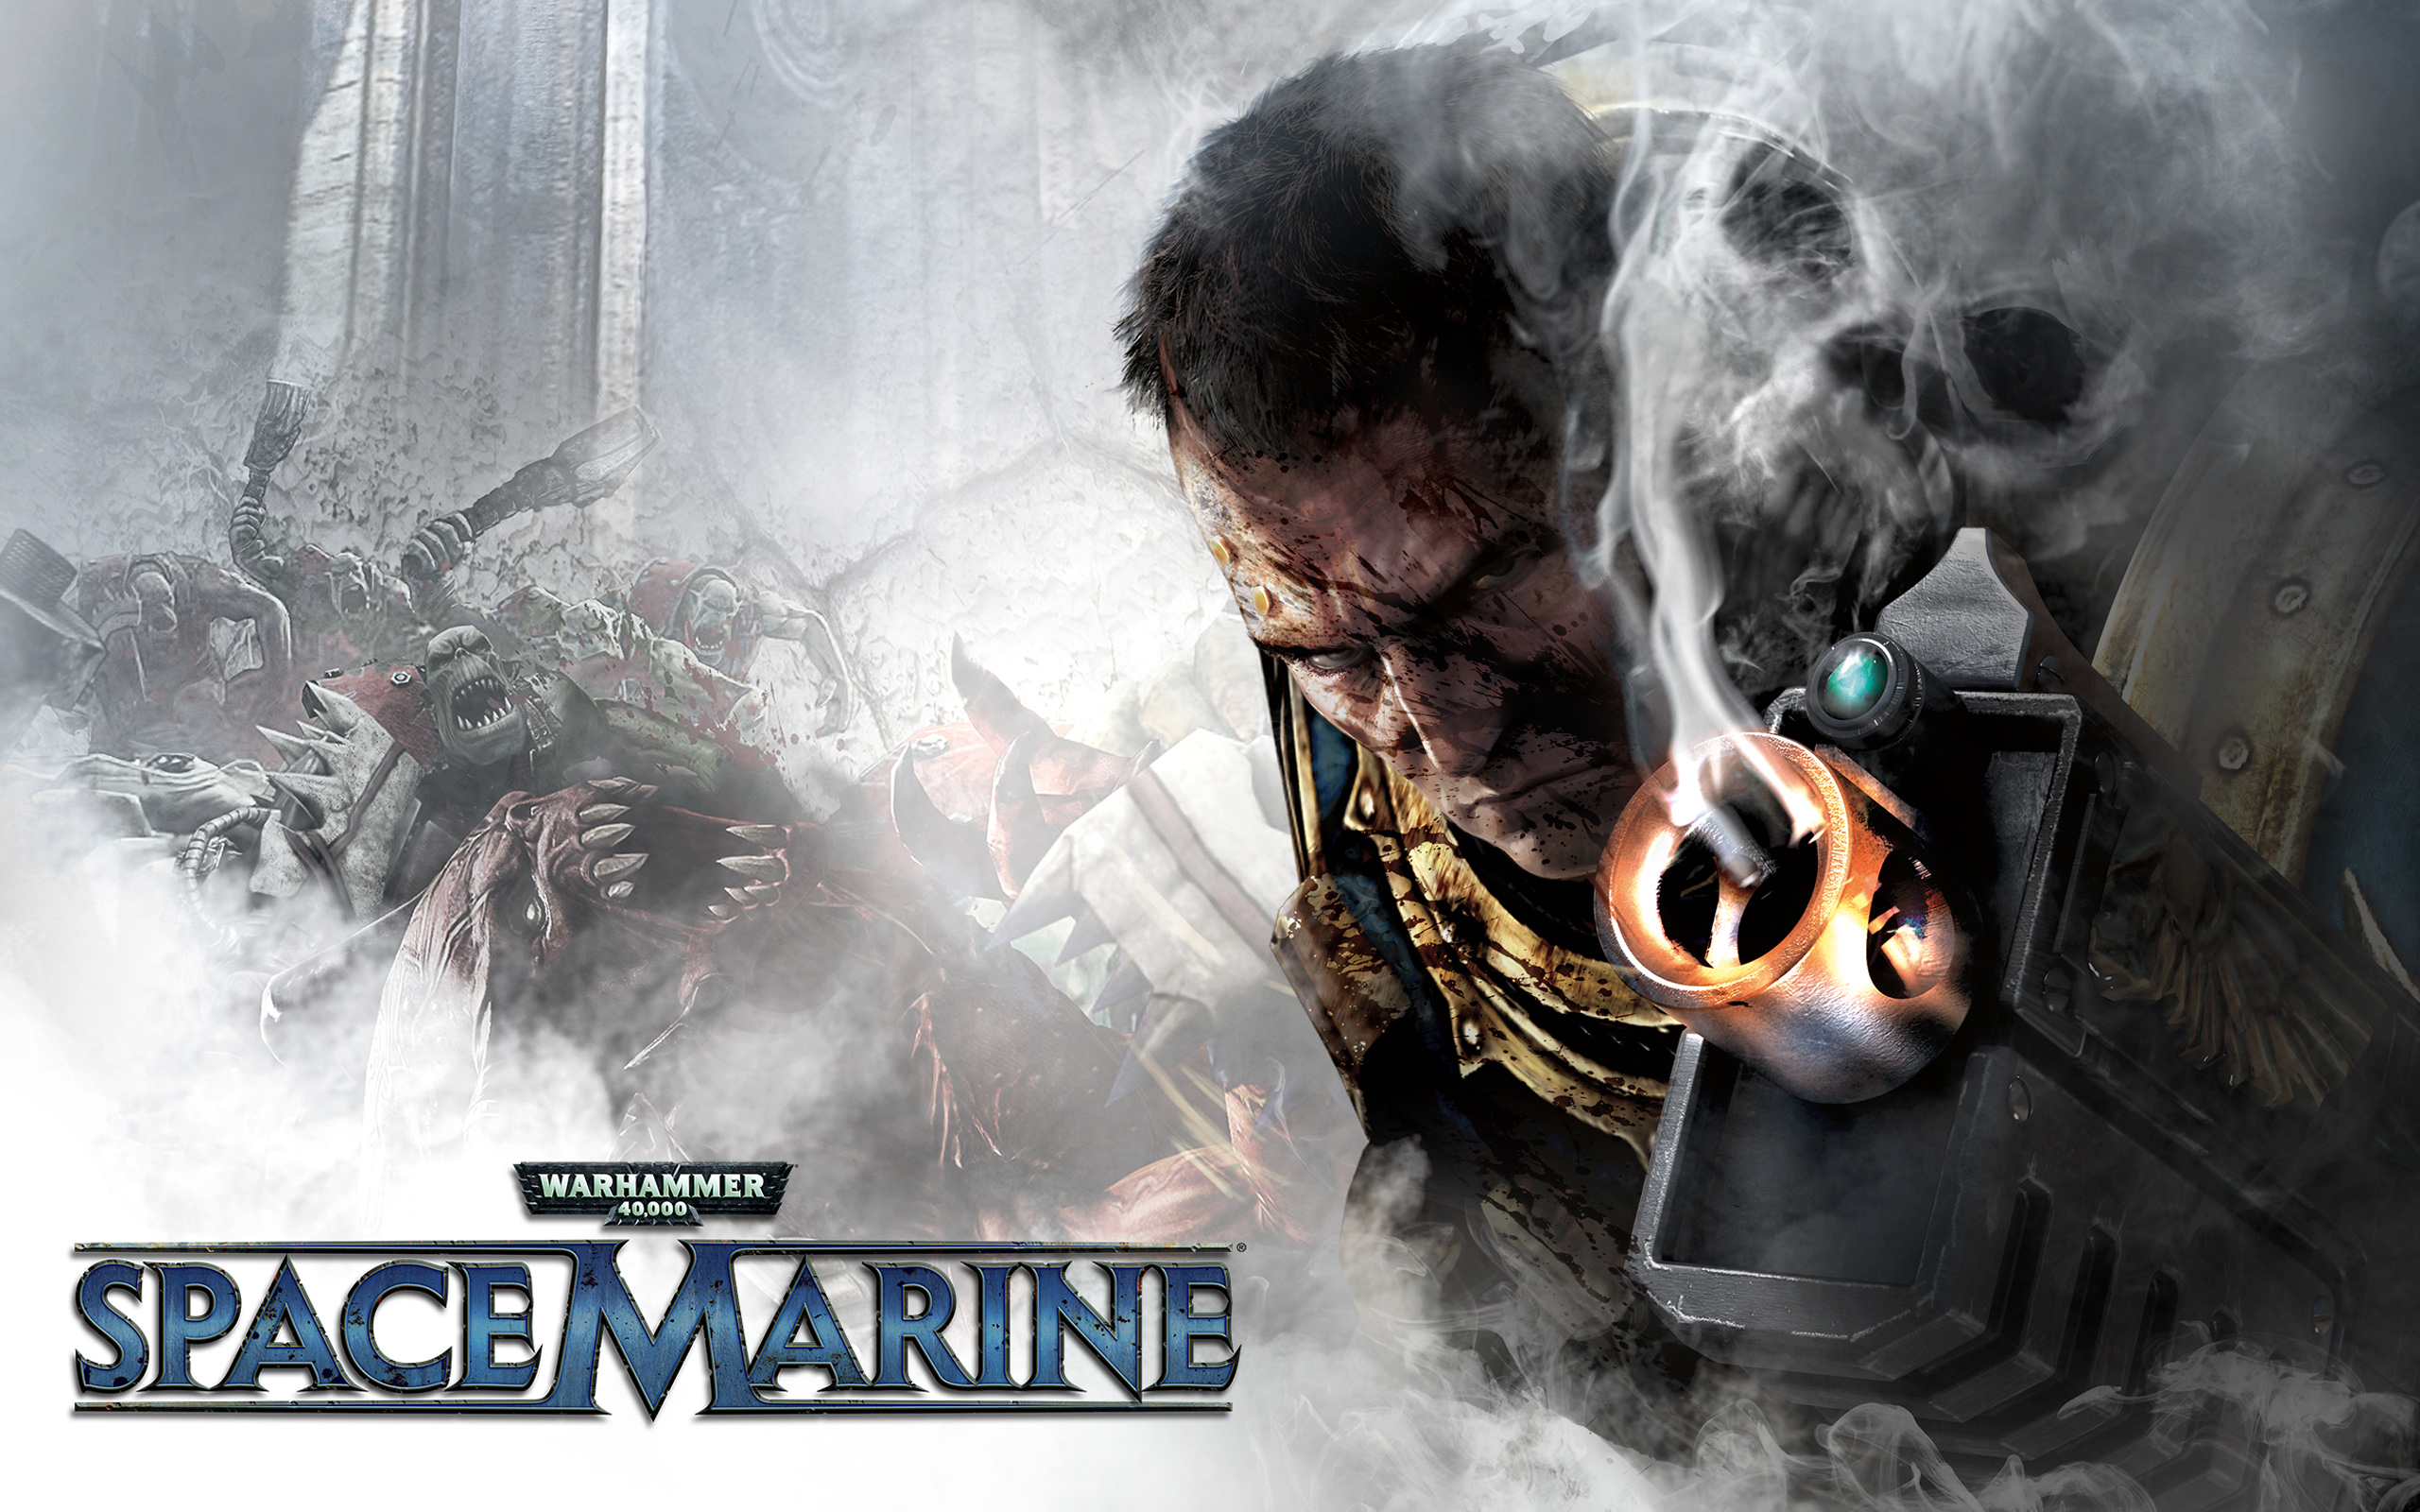 Warhammer Space Marine Game Wallpaper HD